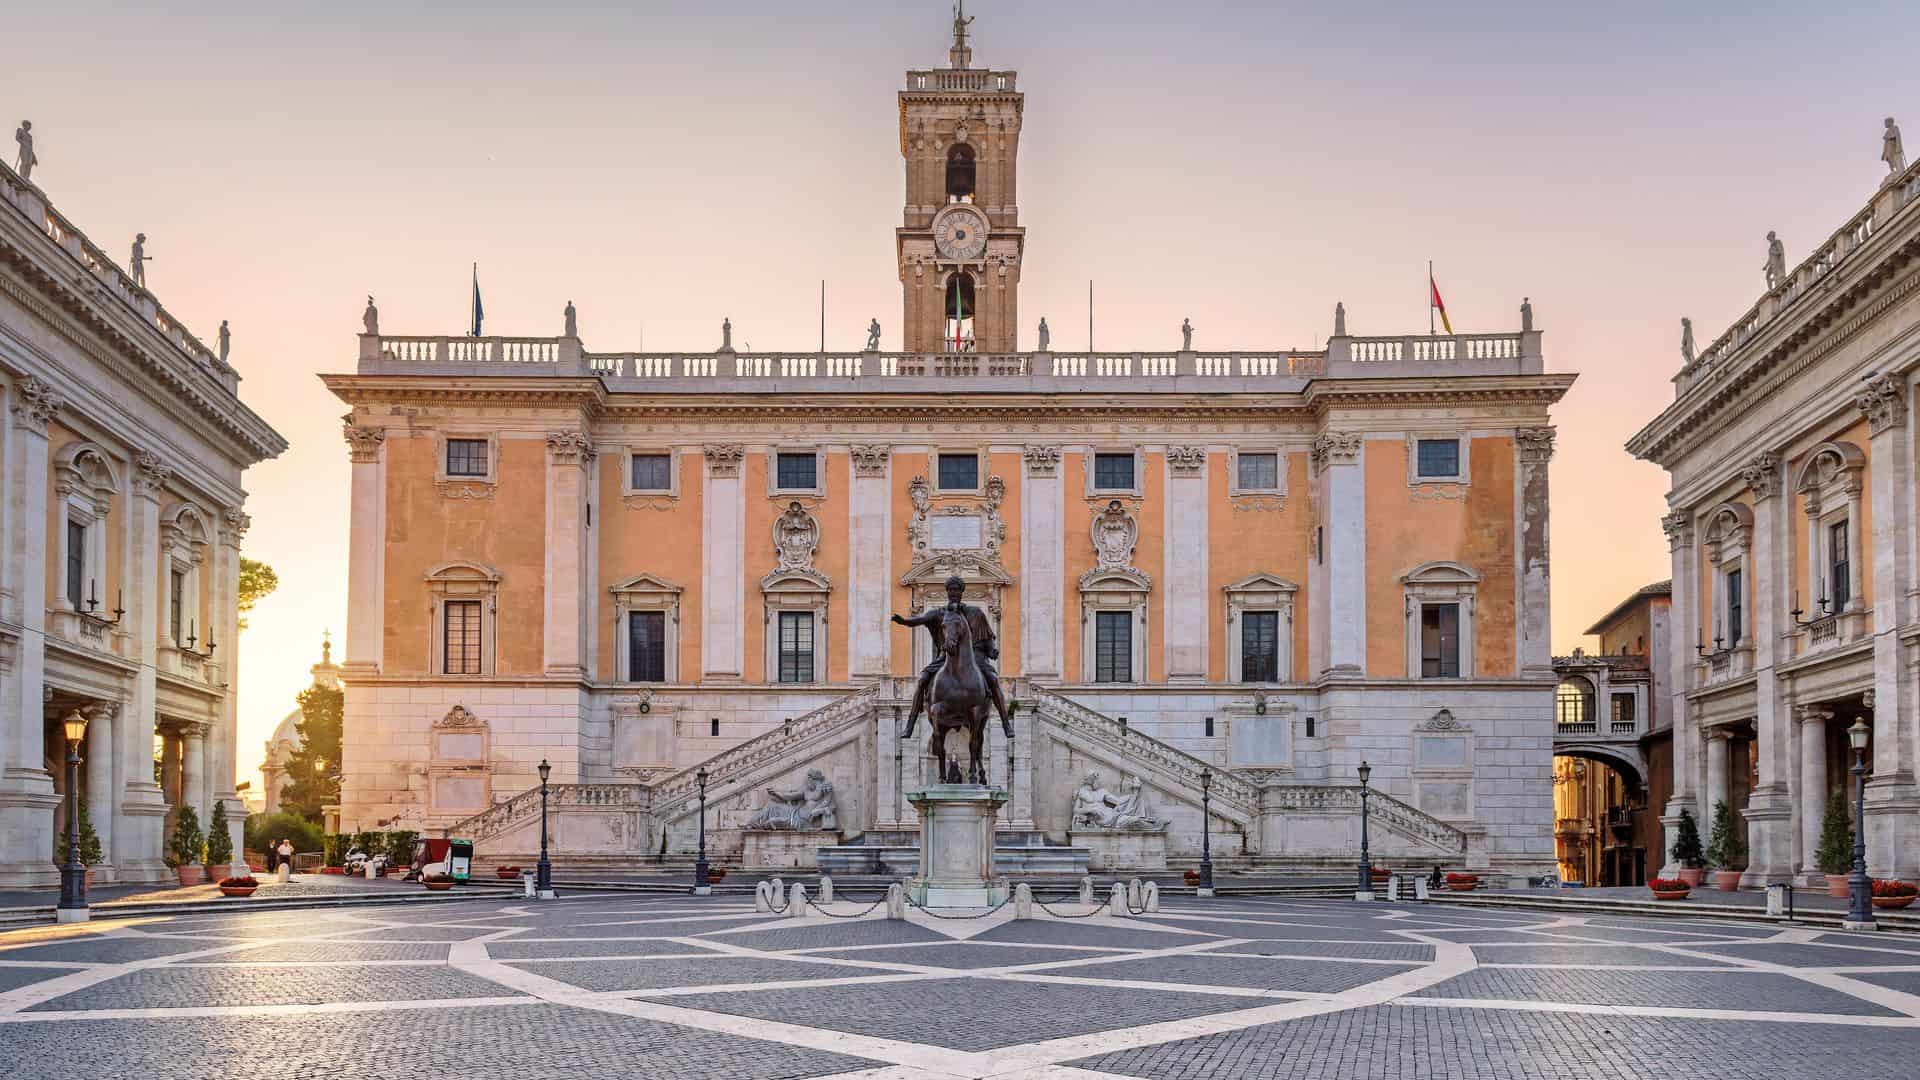 Sunrise at Piazza del Campidoglio in Rome with the statue of Marcus Aurelius in the center of the picture.